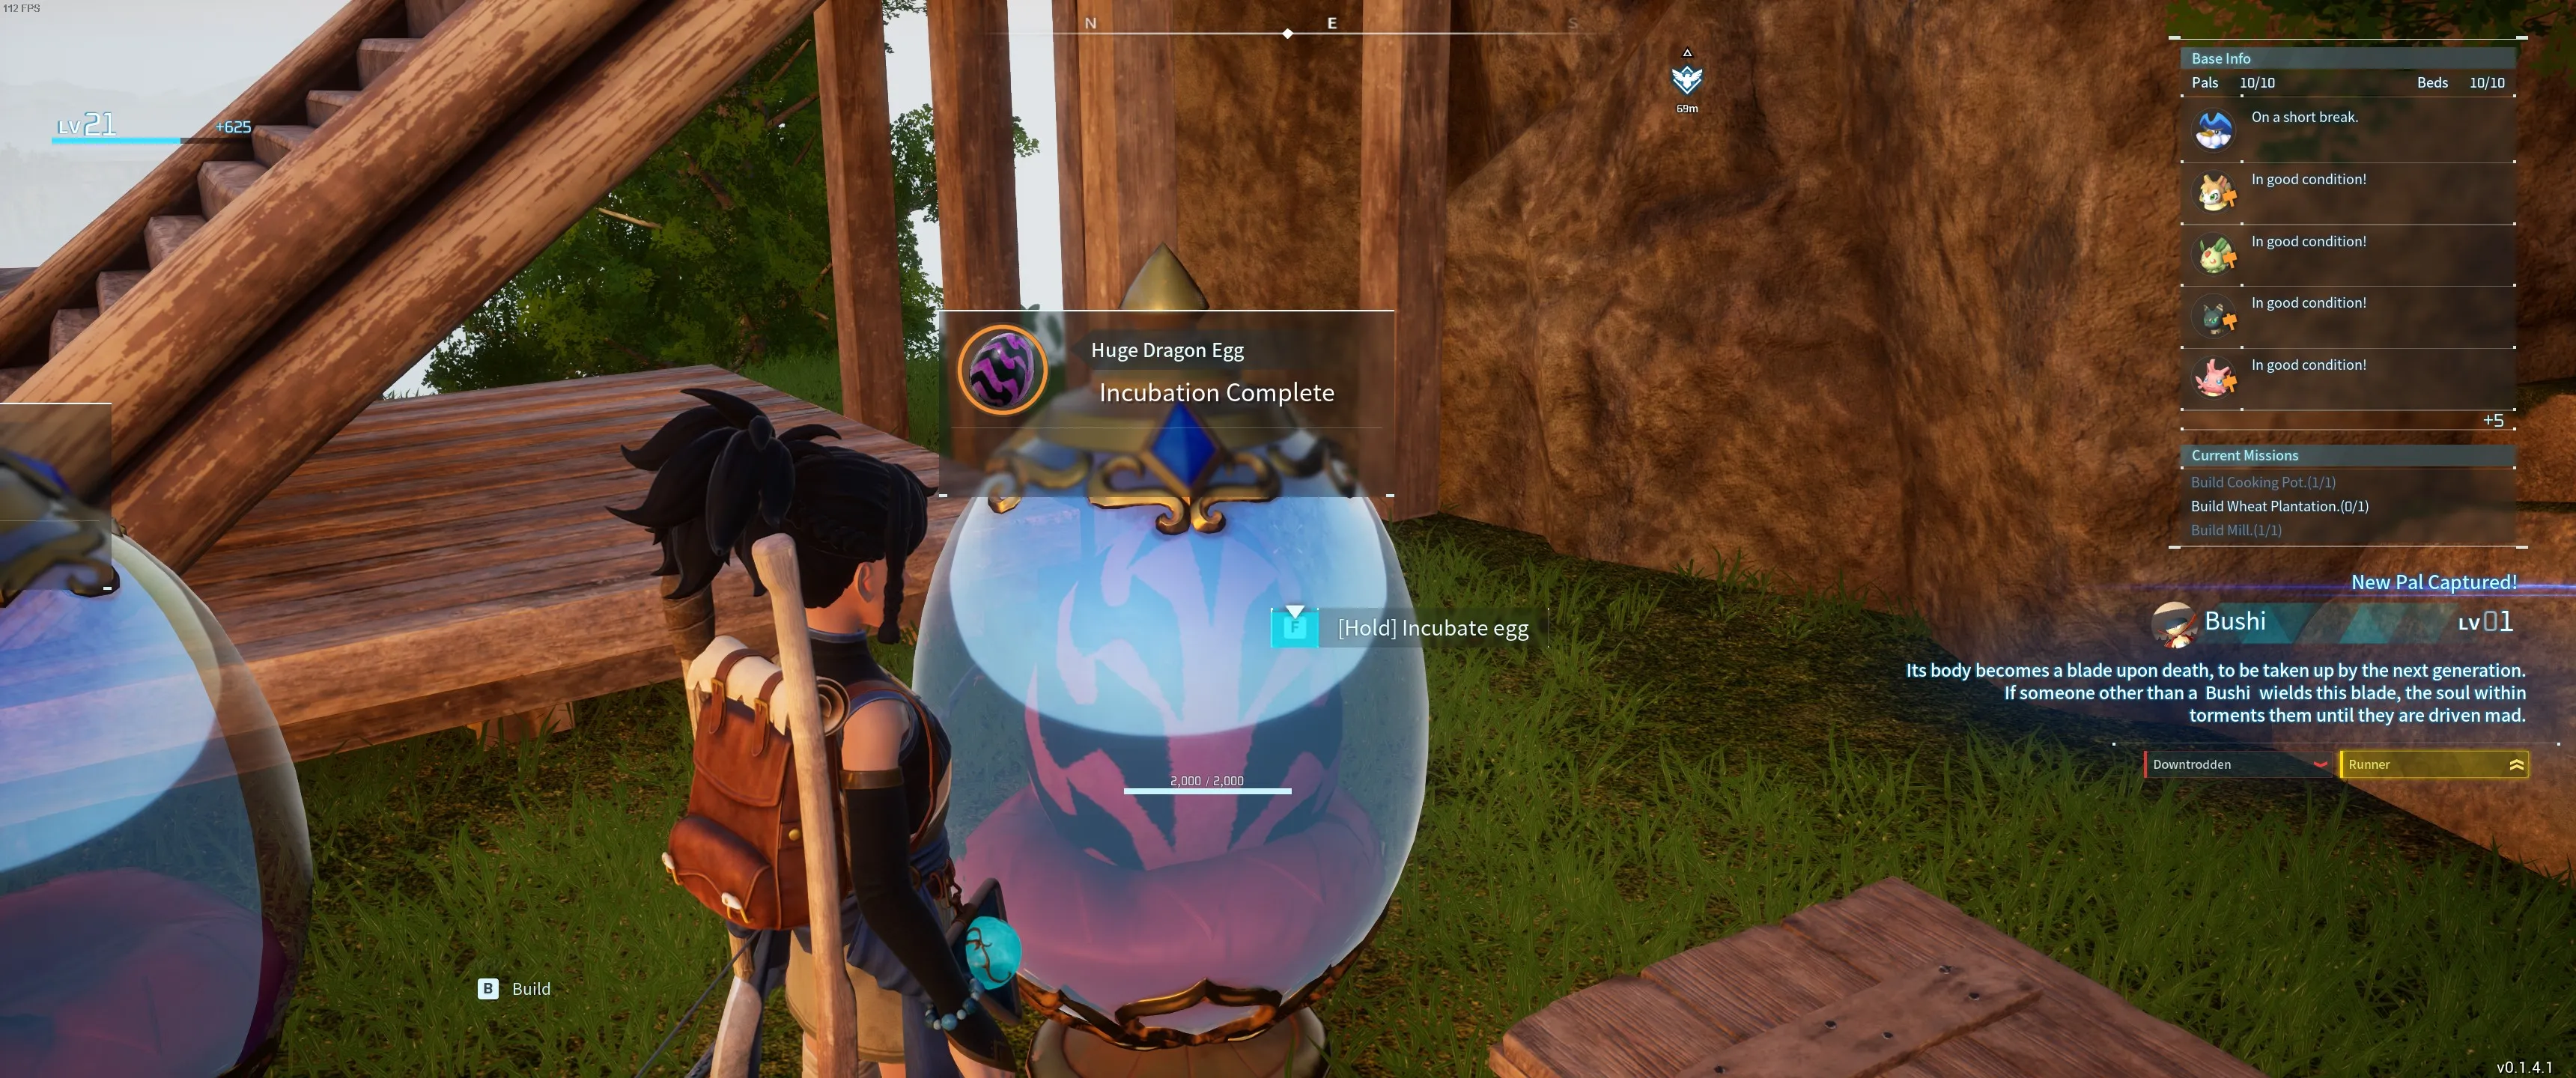 Palworld：玩家在孵化器中观察一个巨大的巨龙蛋